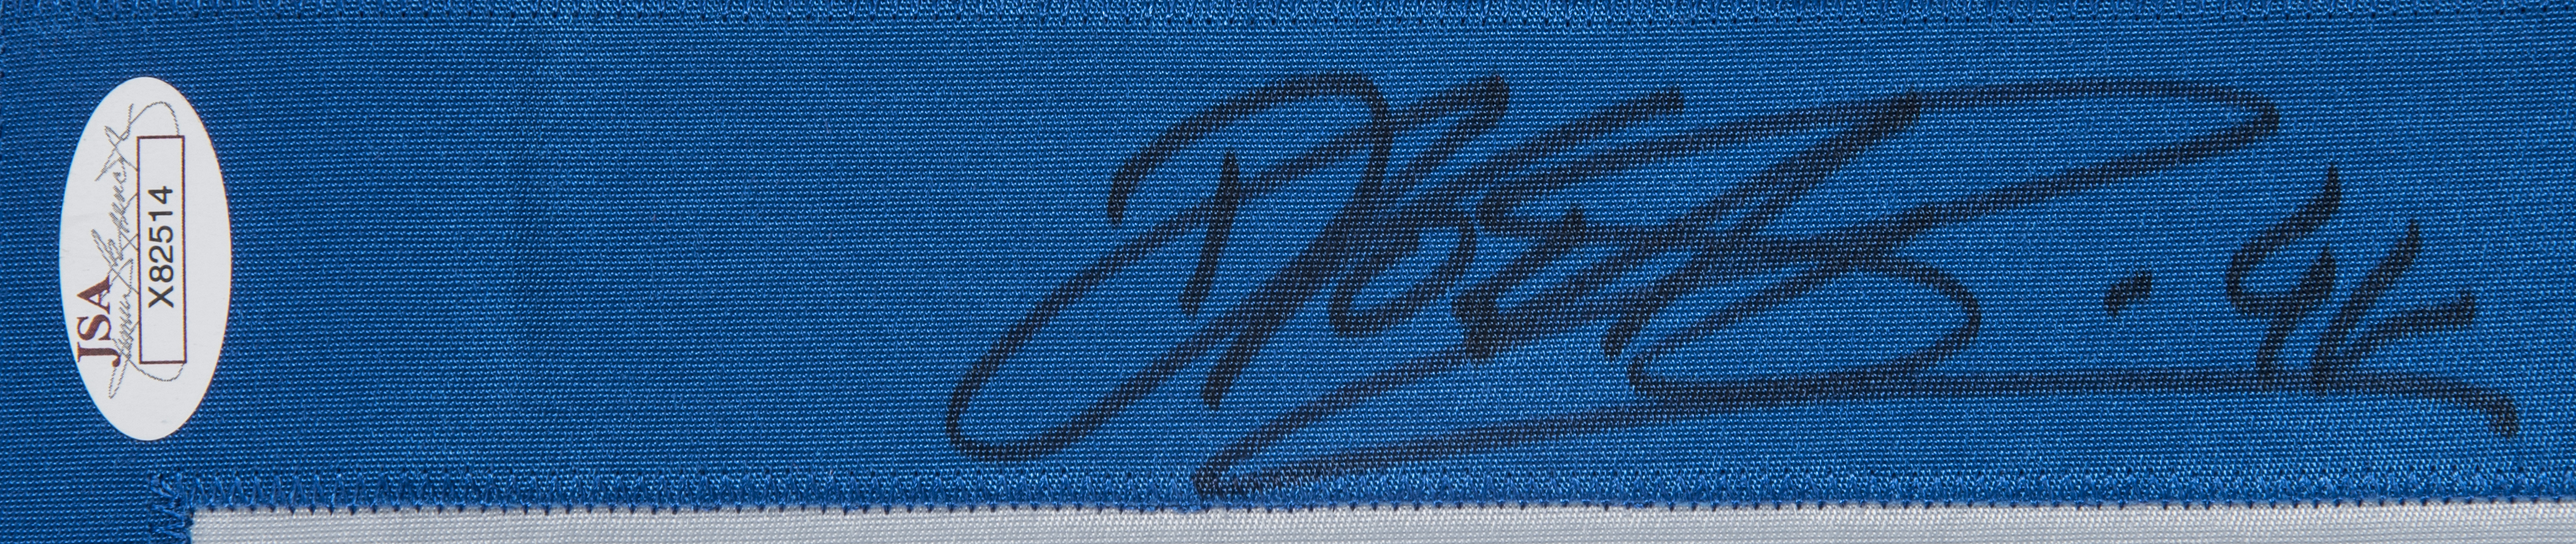 Lot Detail - Dirk Nowitzki Signed Dallas Mavericks Home Jersey (JSA)4197 x 886